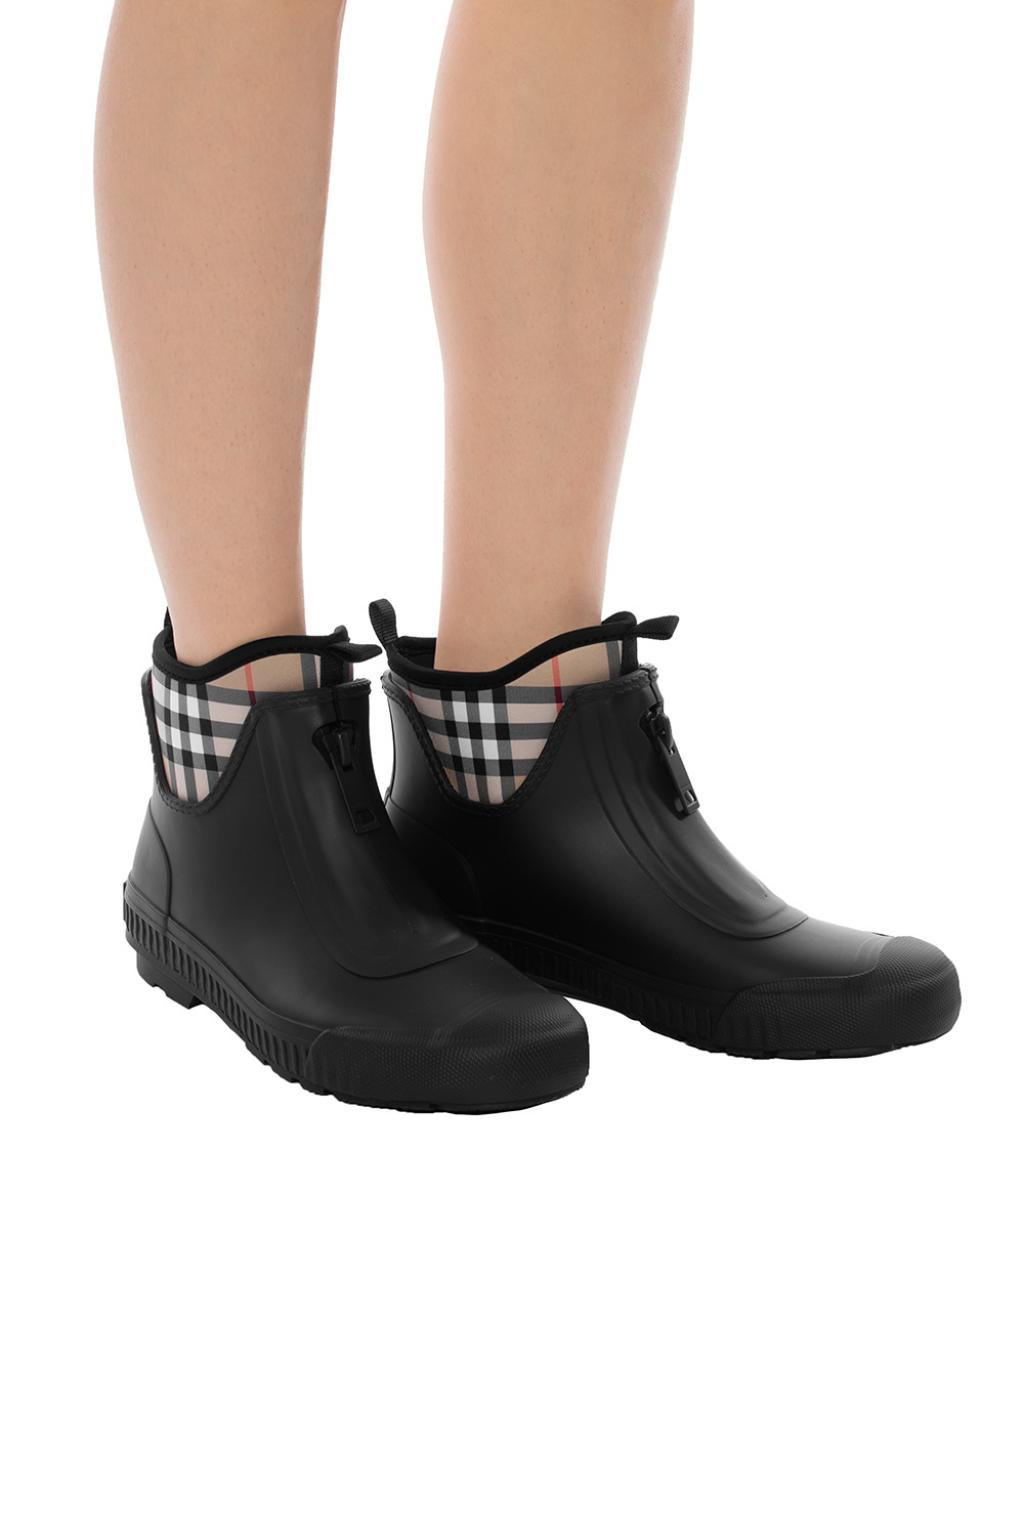 burberry flinton rain boots